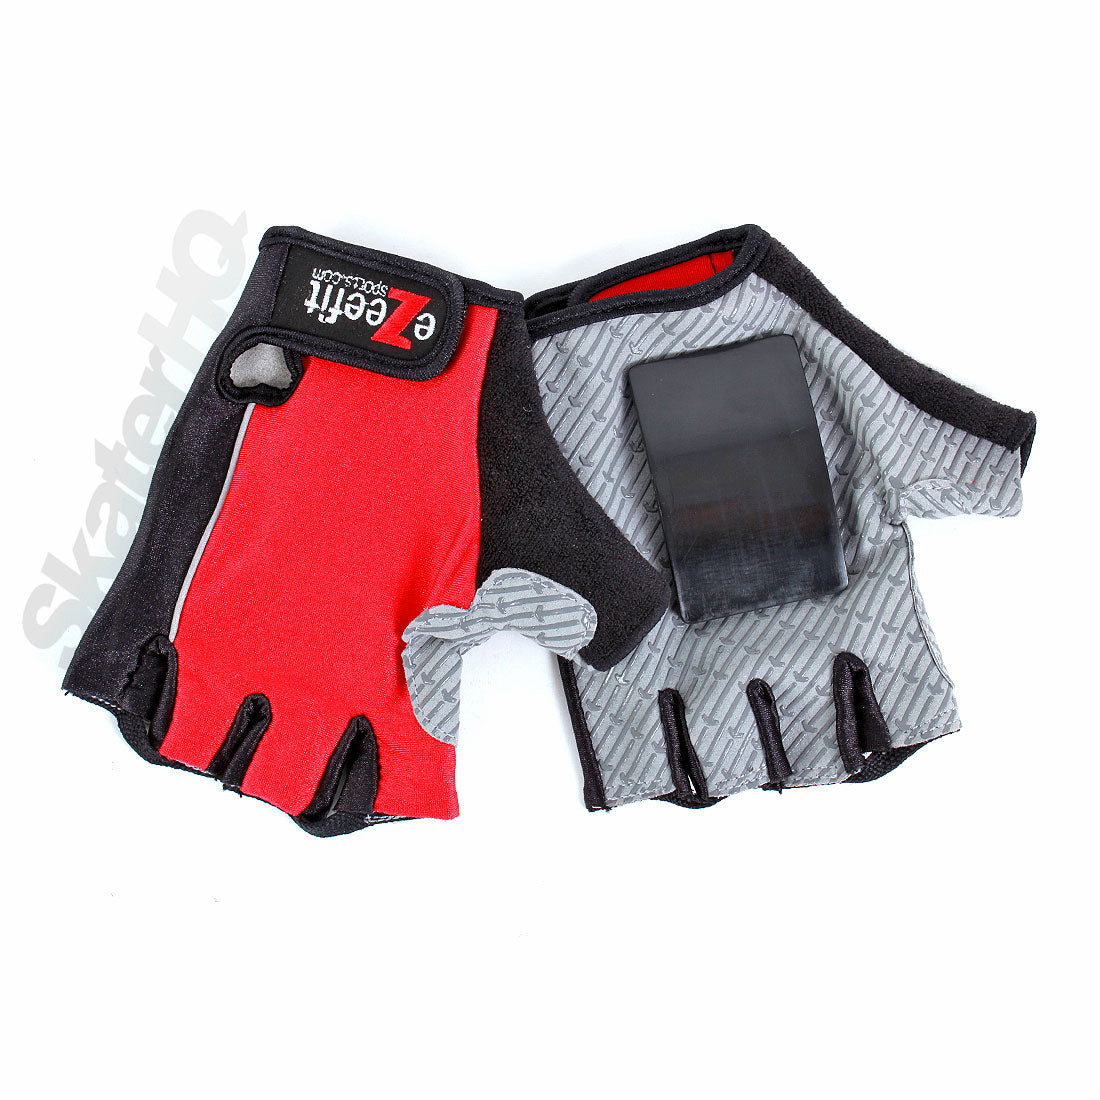 Ezeefit Skate Slider Gloves - Medium Protective Gear